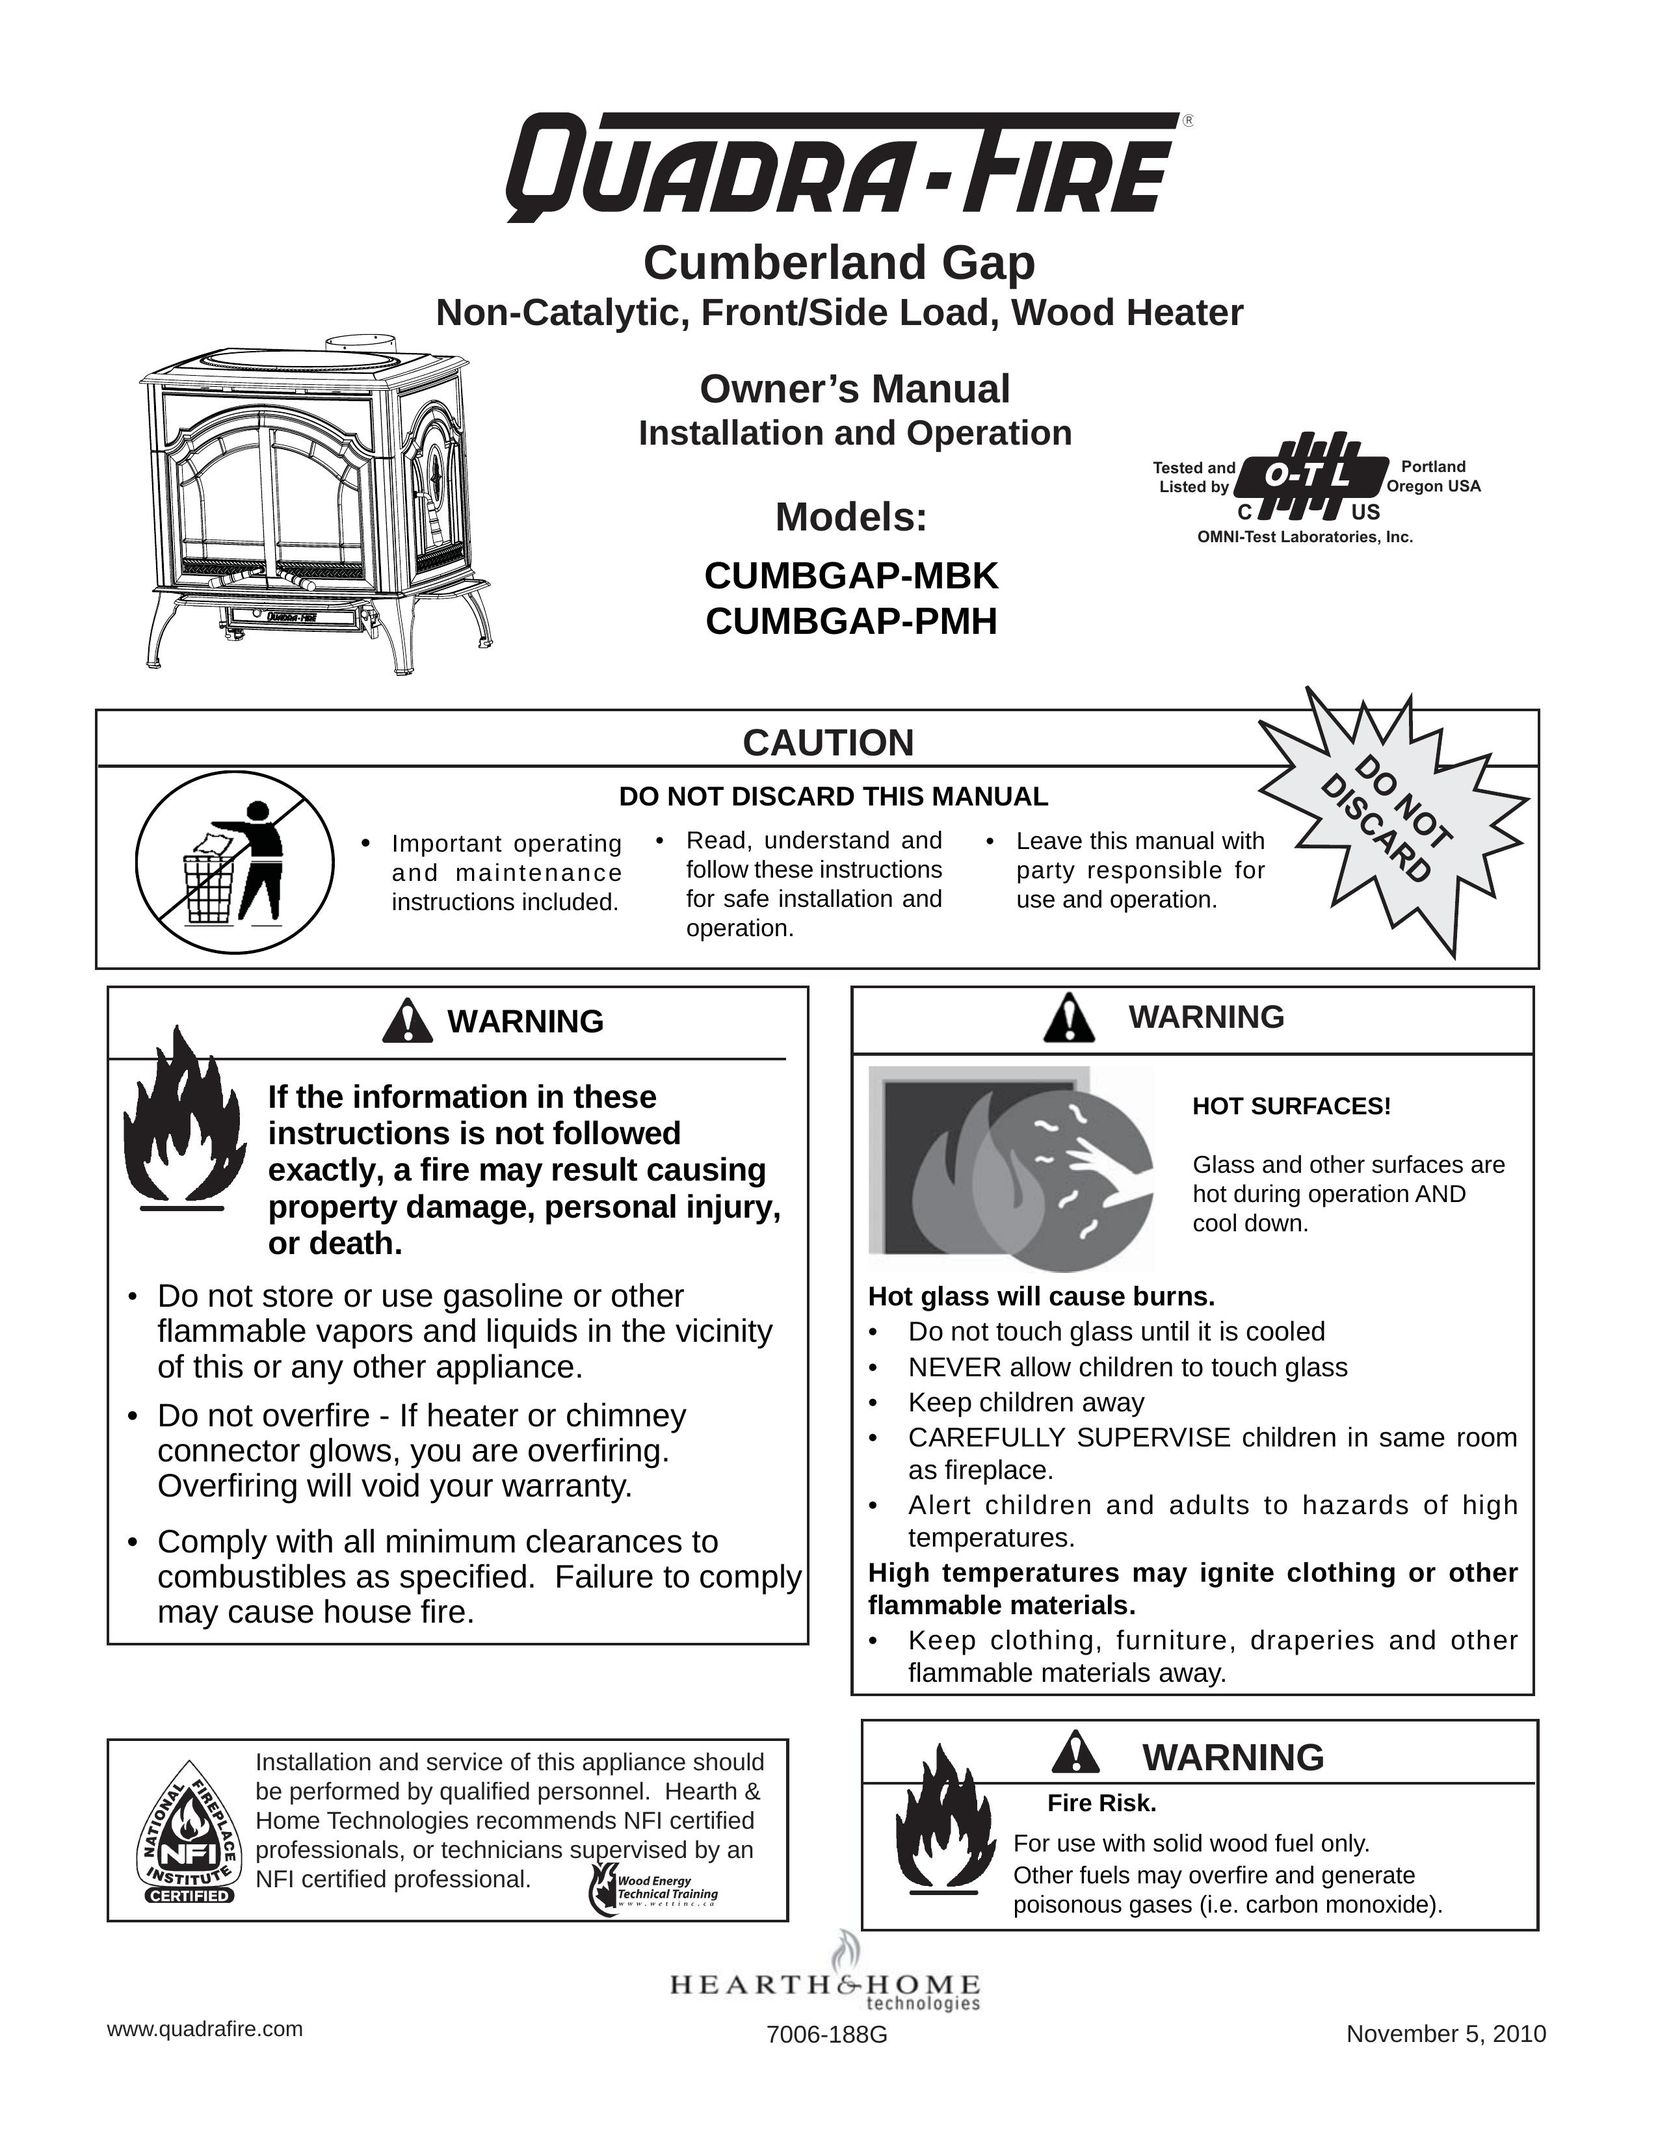 Quadra-Fire CUMPGAP-PMH Indoor Fireplace User Manual